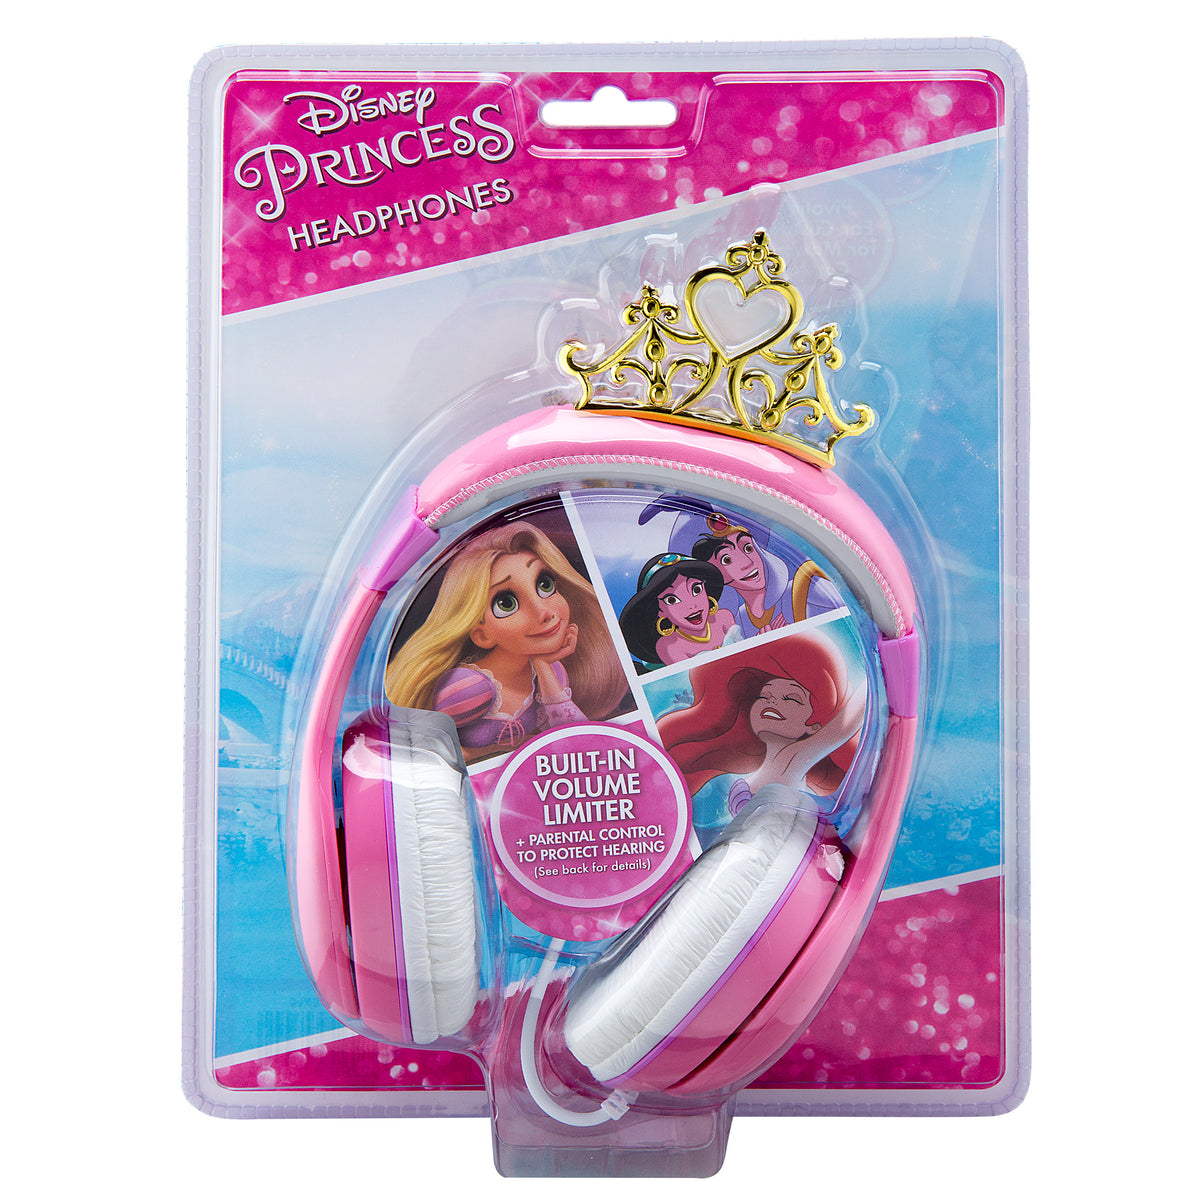 KIDdesigns Disney Princess Kid Safe Wired Headphones - Pink